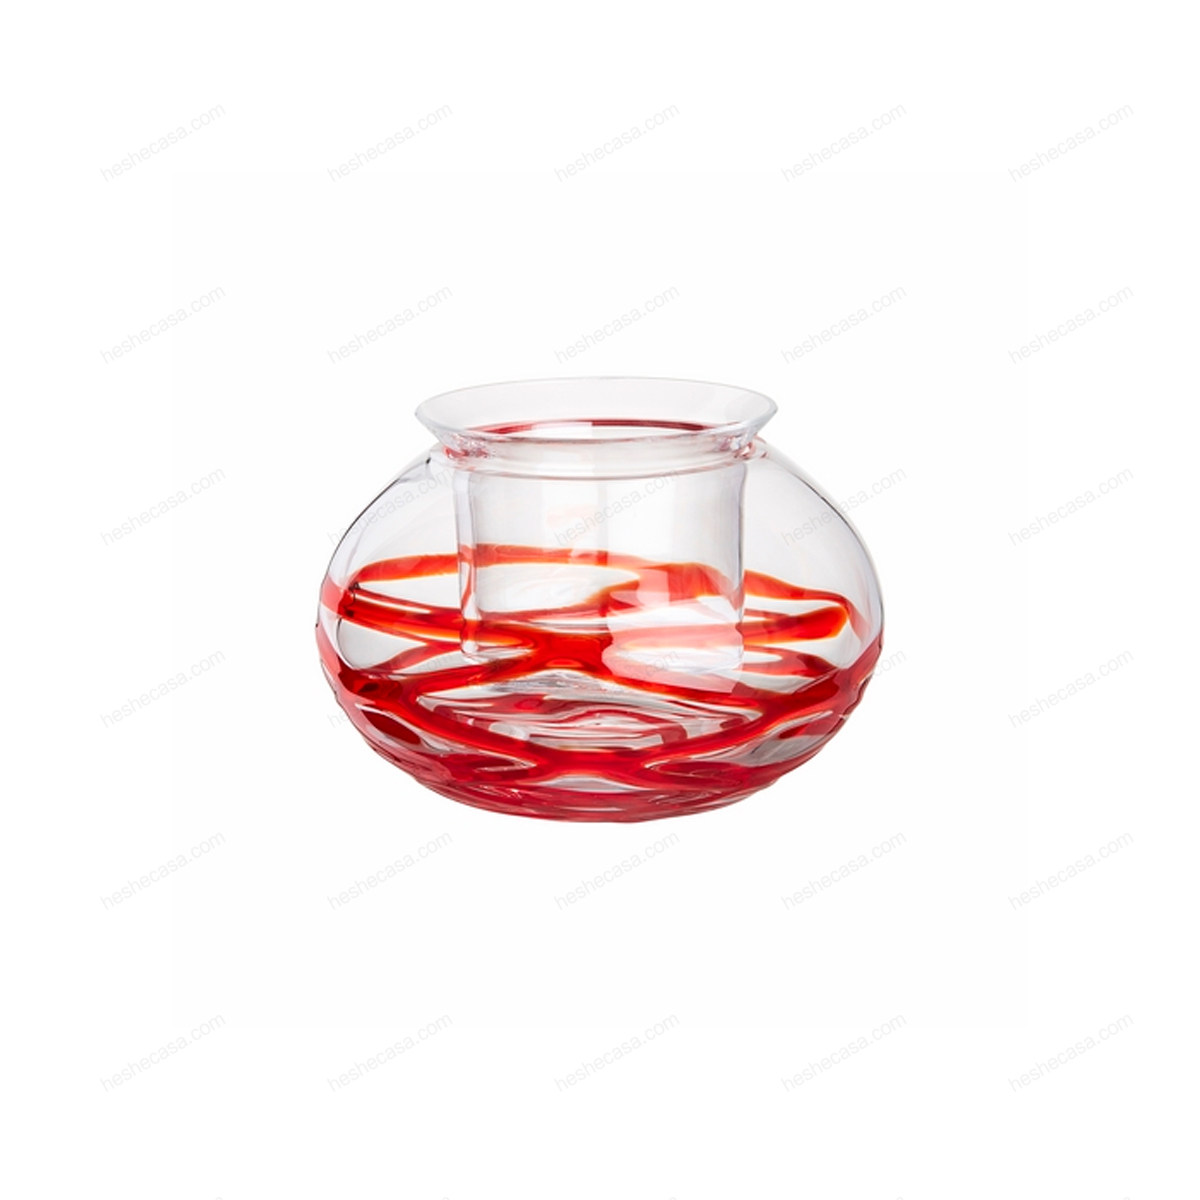 Lumino-Rete Rossa花瓶